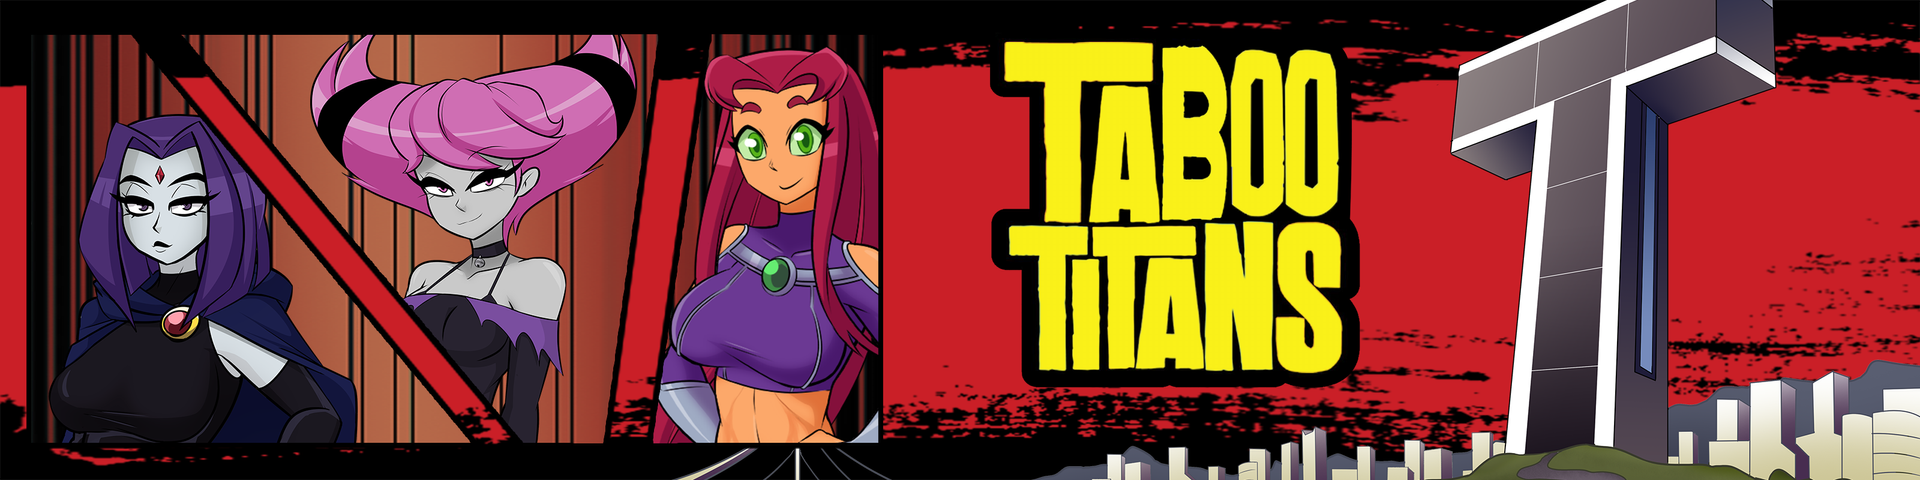 1291577 taboo titans banner